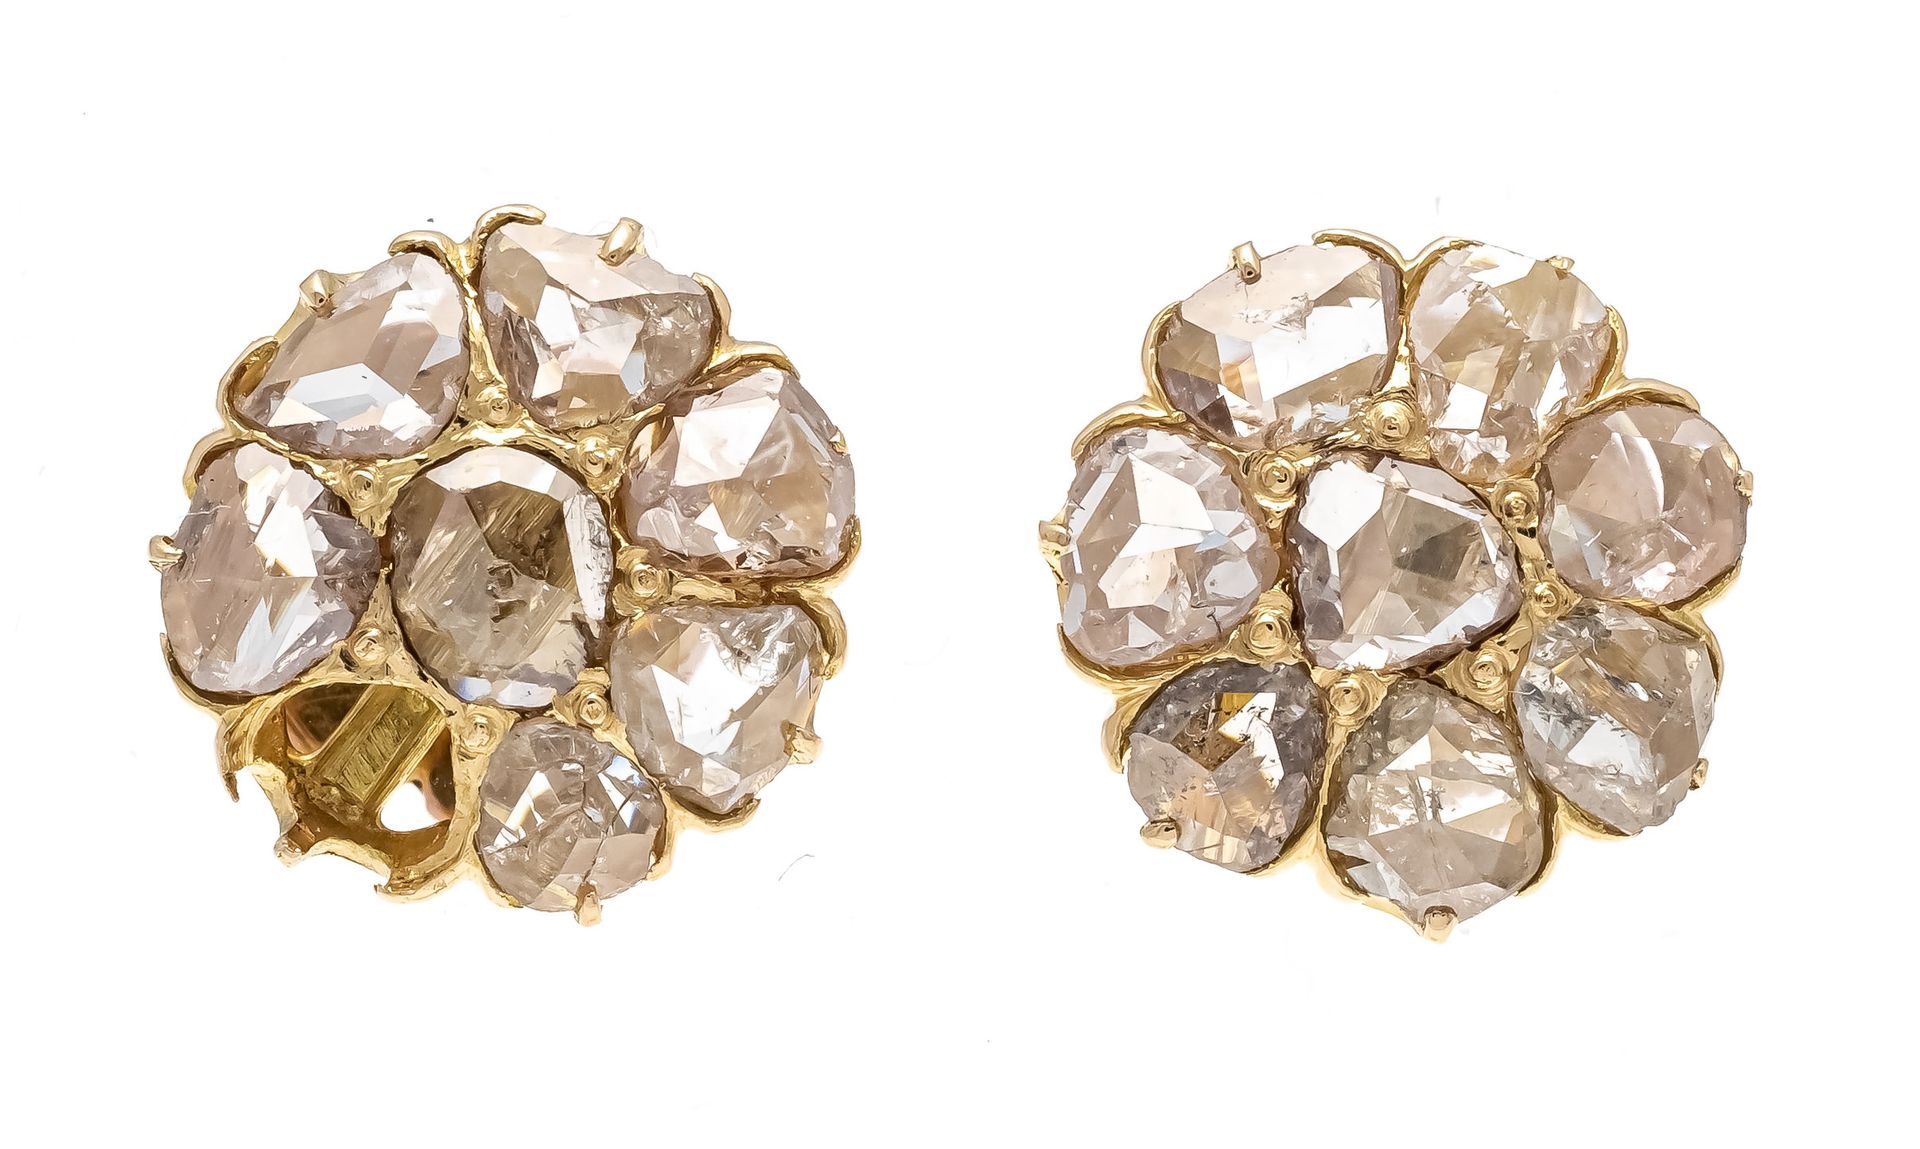 Null 钻石玫瑰耳环GG 585/000，每个有8个3毫米的钻石玫瑰（1个丢失），螺丝螺母，直径10毫米，3.0克